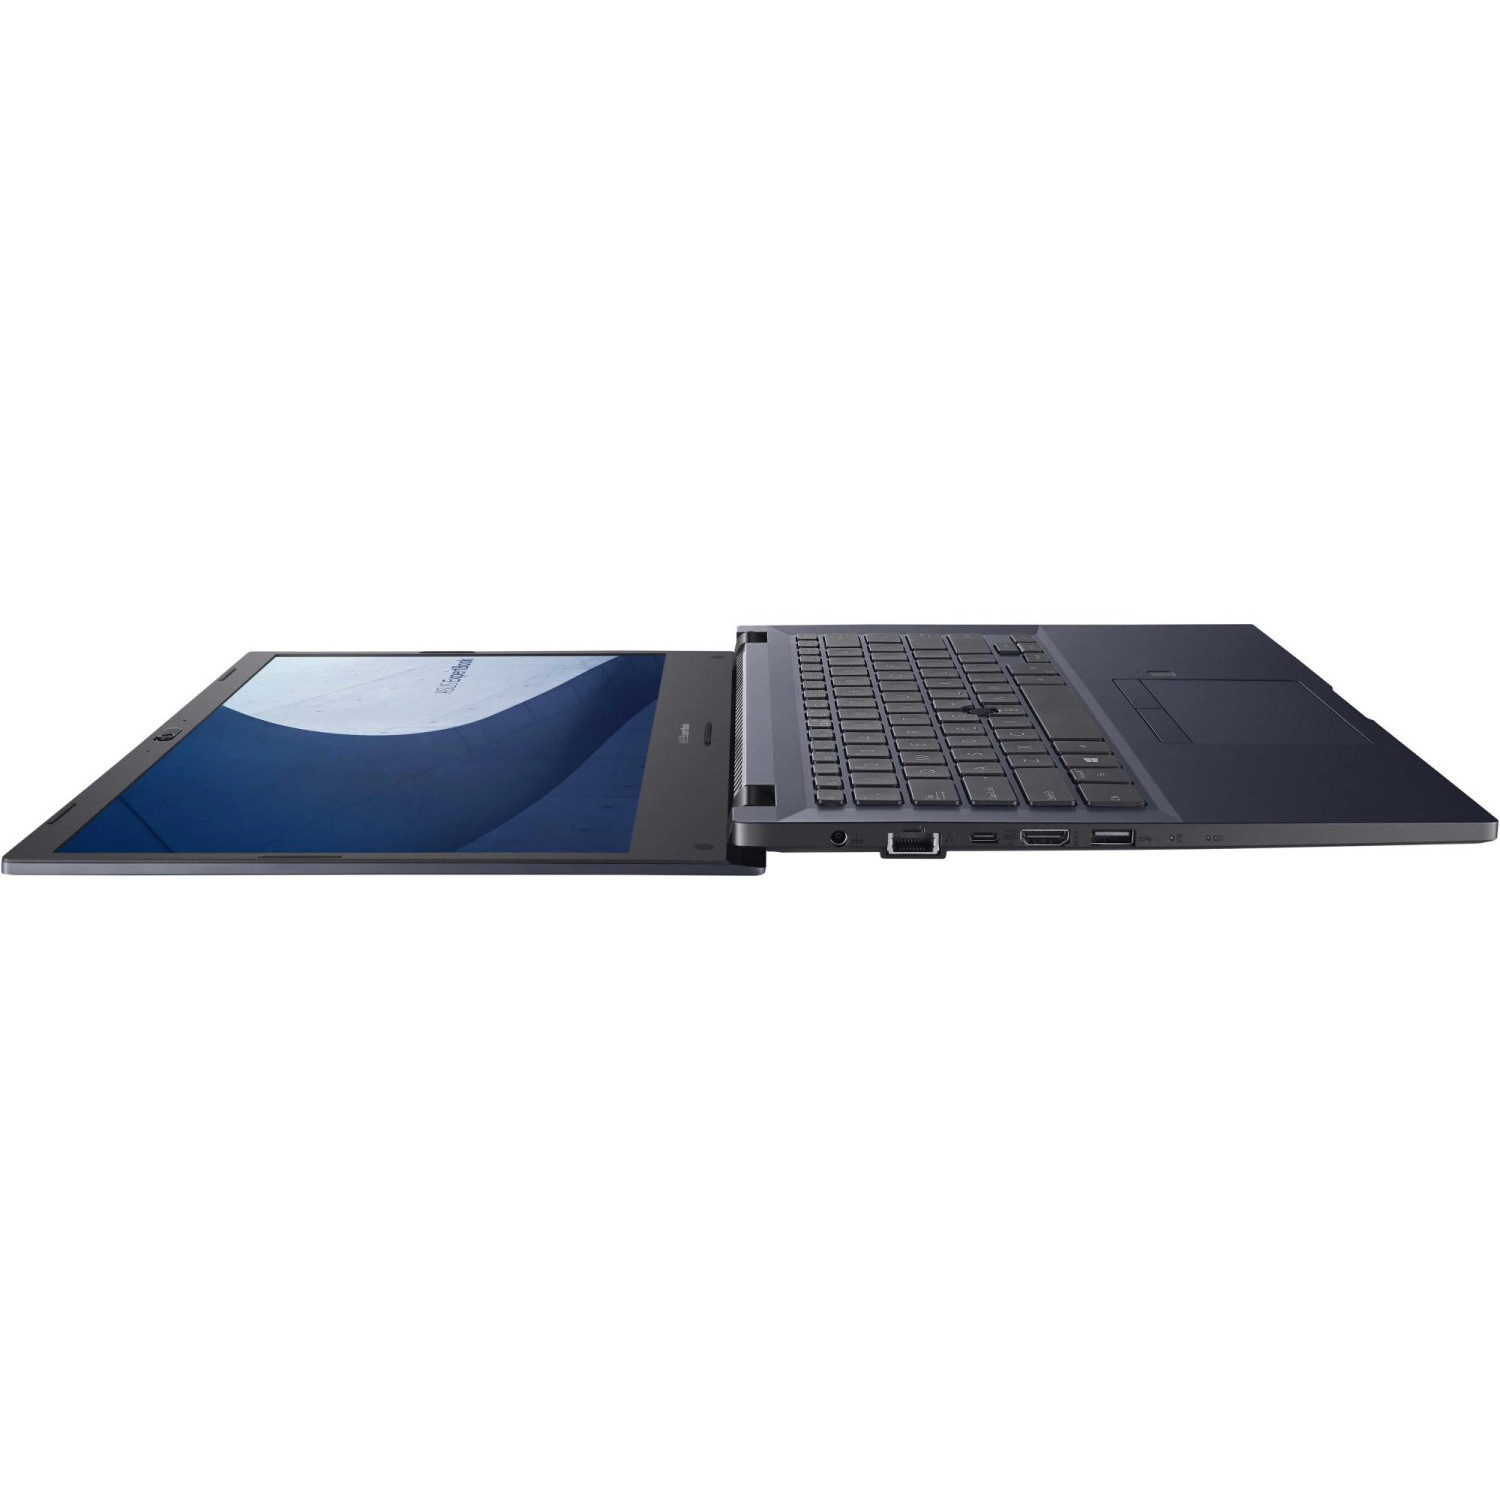 ASUS Лаптоп ExpertBook P2 P2451FA-EK0111R, 14" FHD, Intel i5-10210U(1.6Ghz Up to 4.2Ghz, 6MB), 8GB DDR4 RAM, 256GB PCIE SSD, Win 10 Pro, Star Black